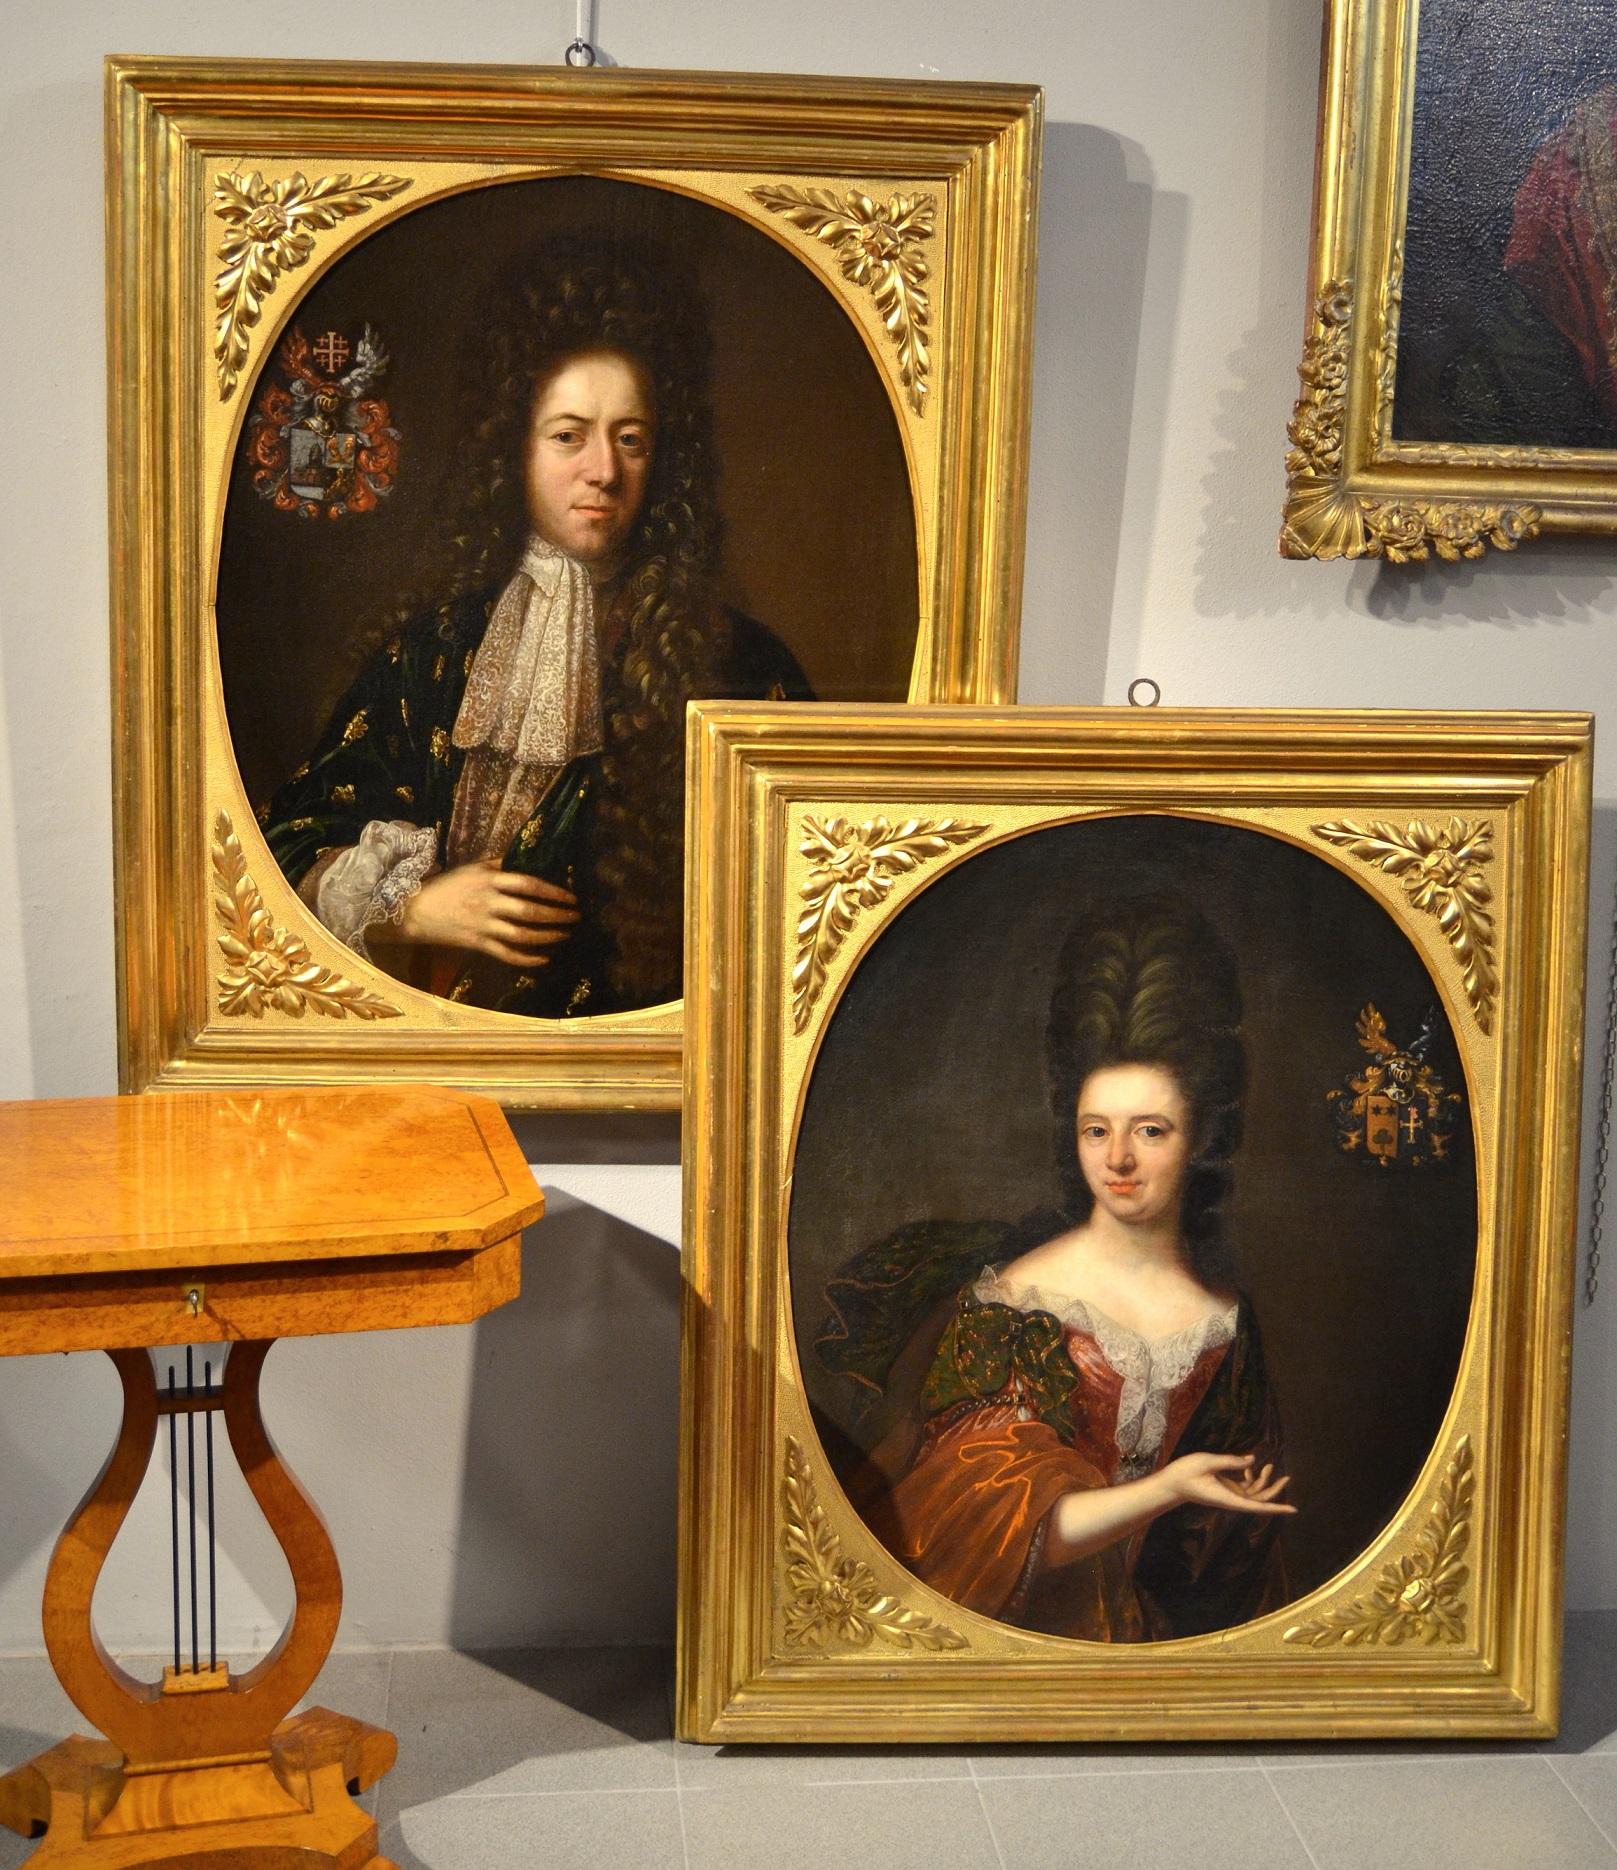 17th century portrait paintings